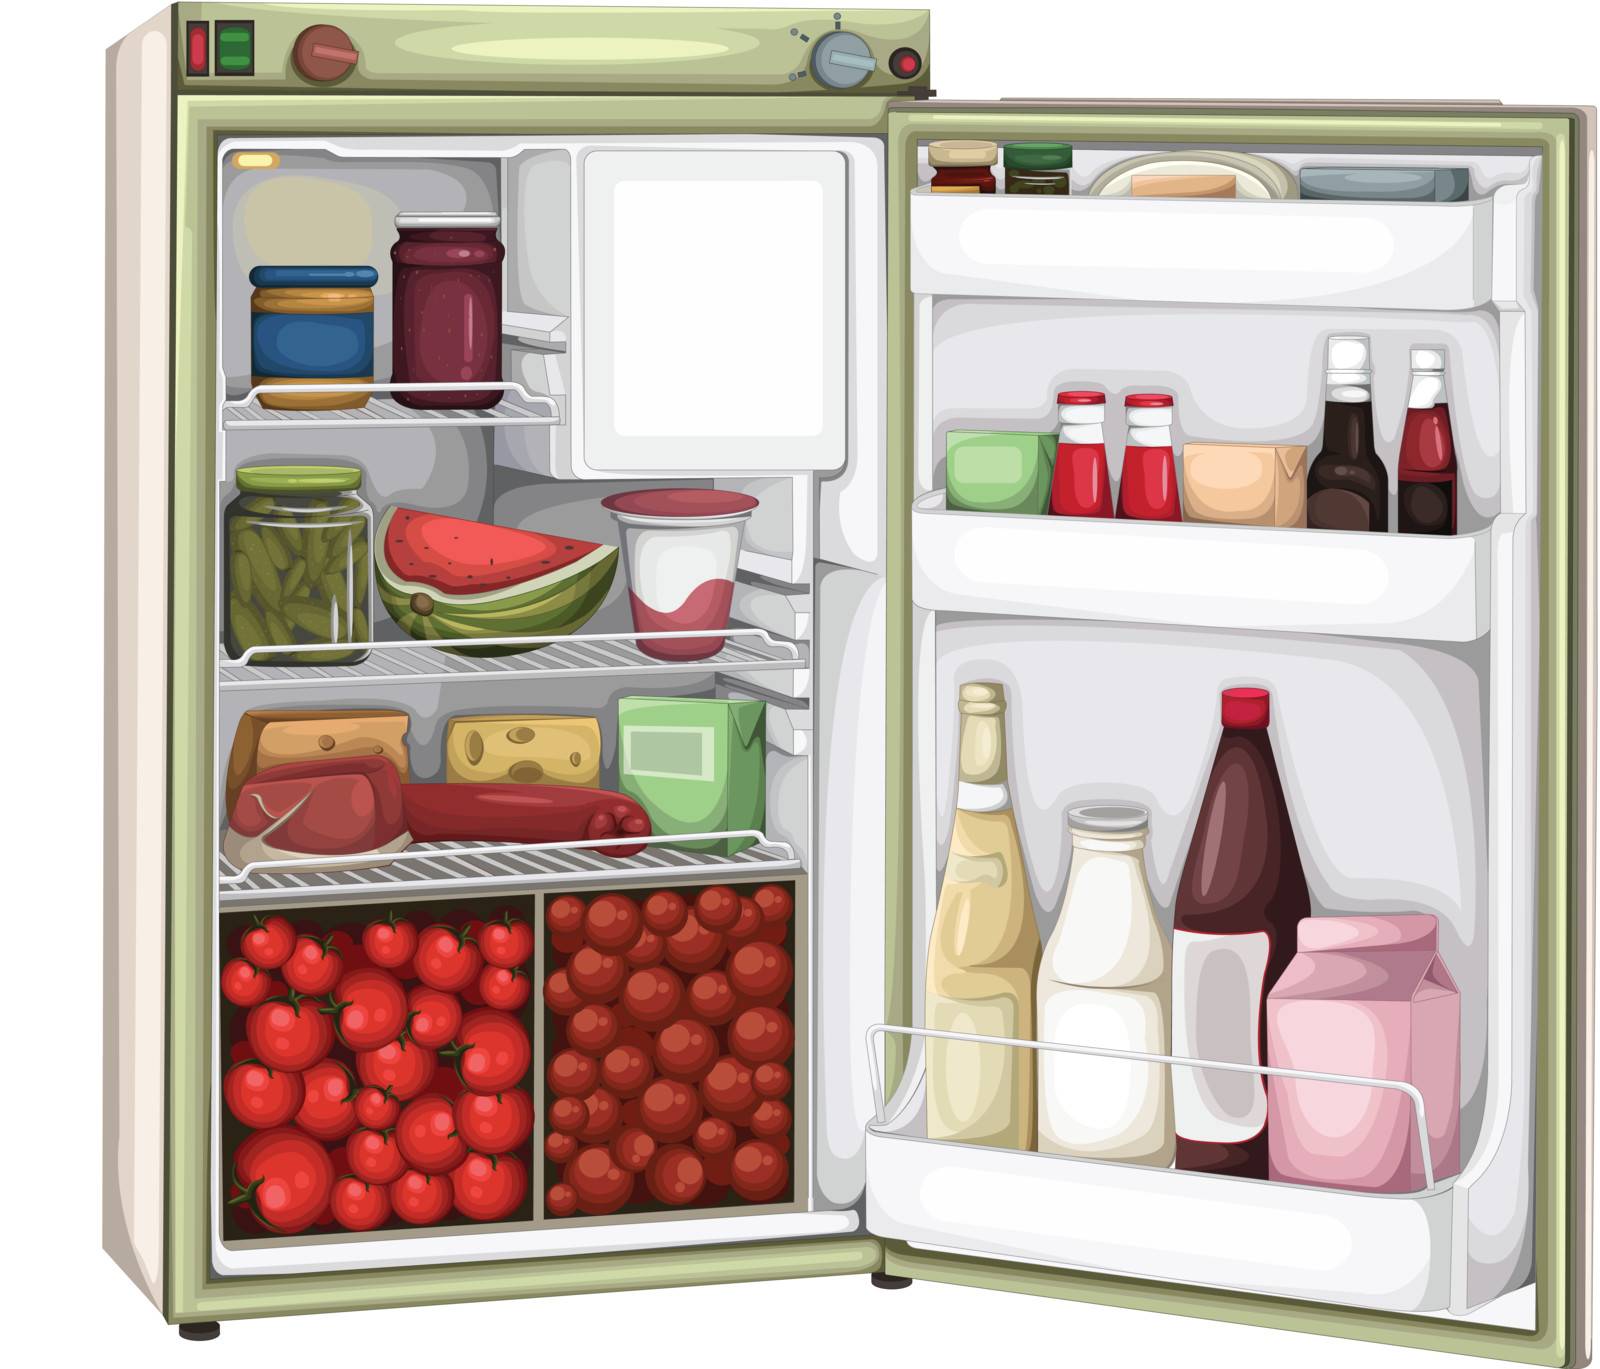 Refrigerator by Kireeva